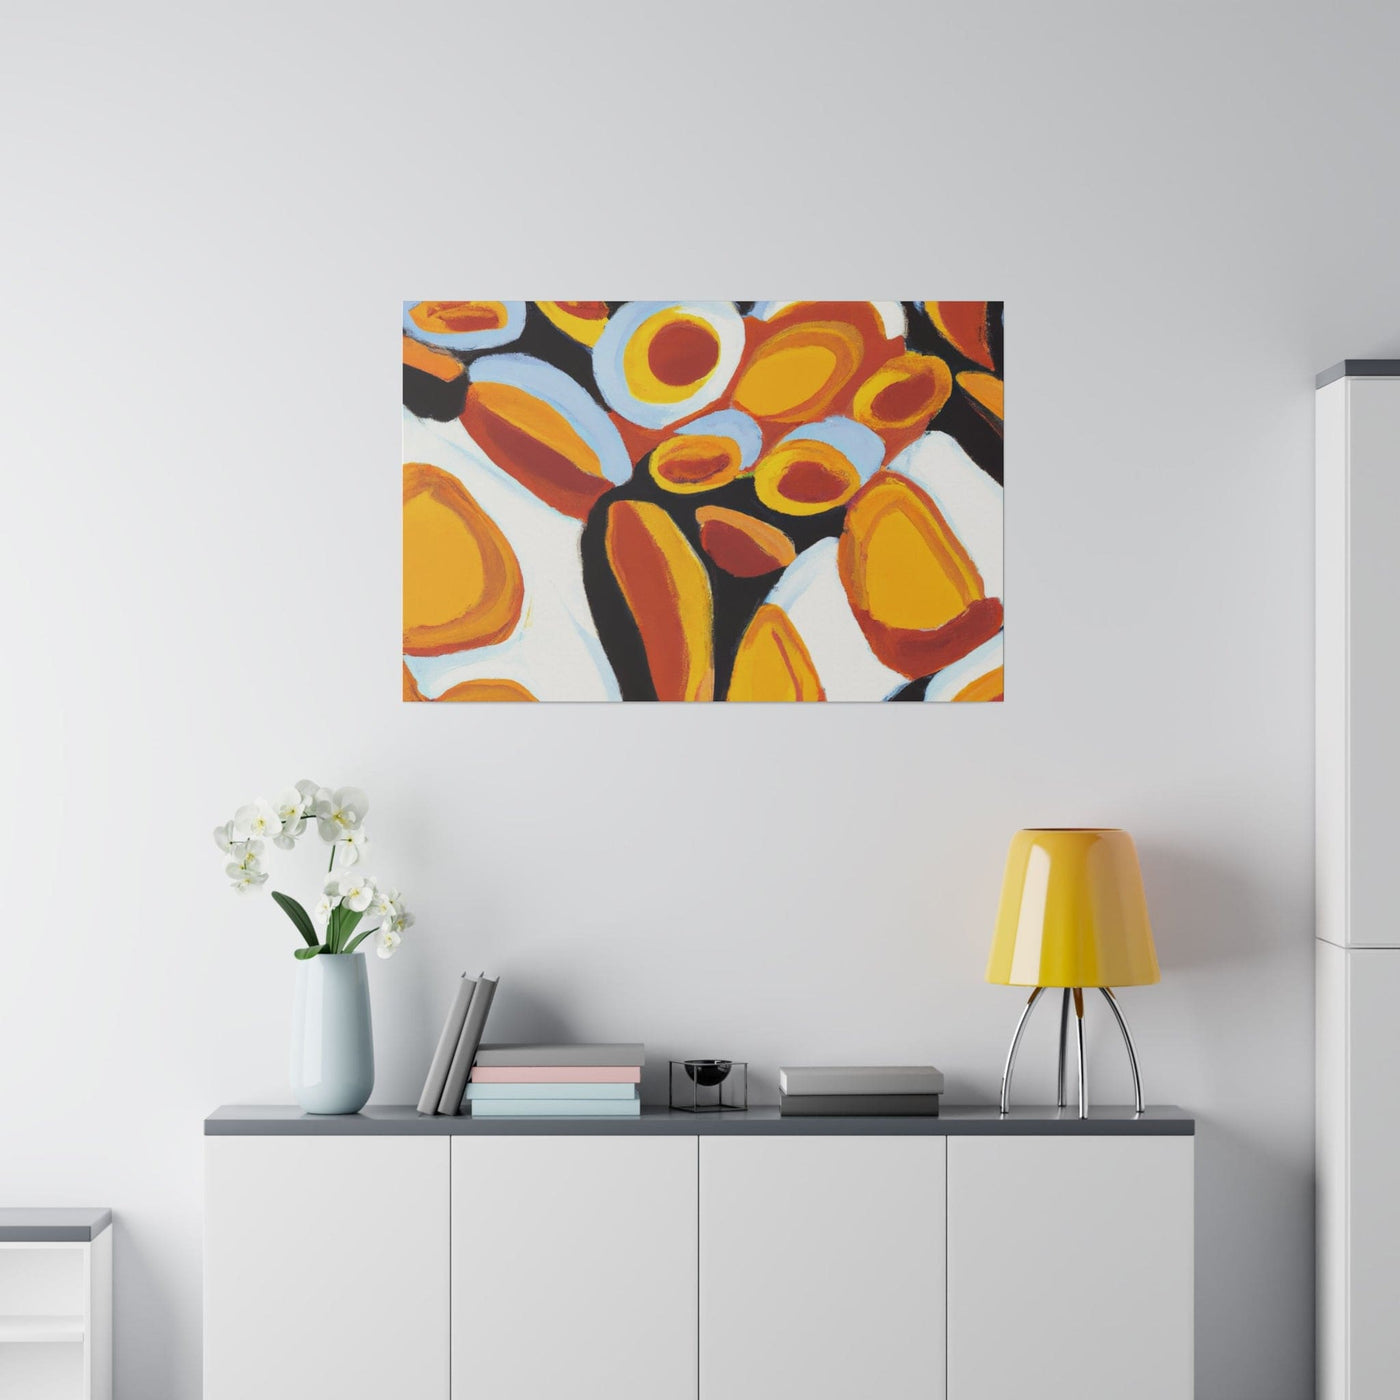 Wall Art Decor Print for Living Room Office Wall Decor Bedroom Artwork Orange